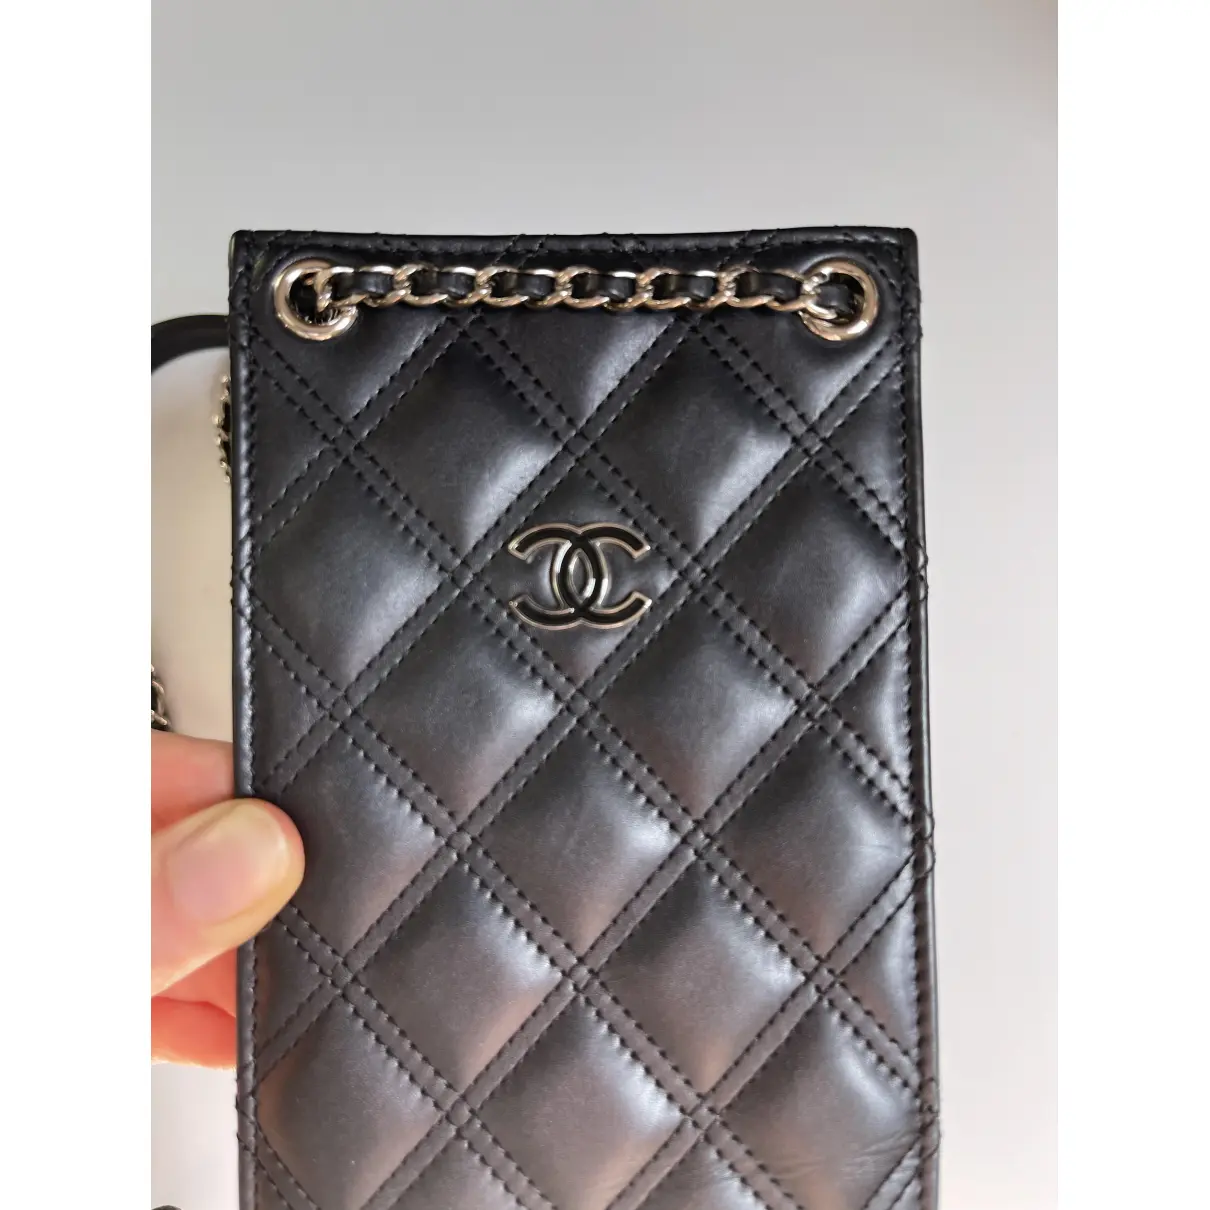 Buy Chanel North South Boy leather crossbody bag online